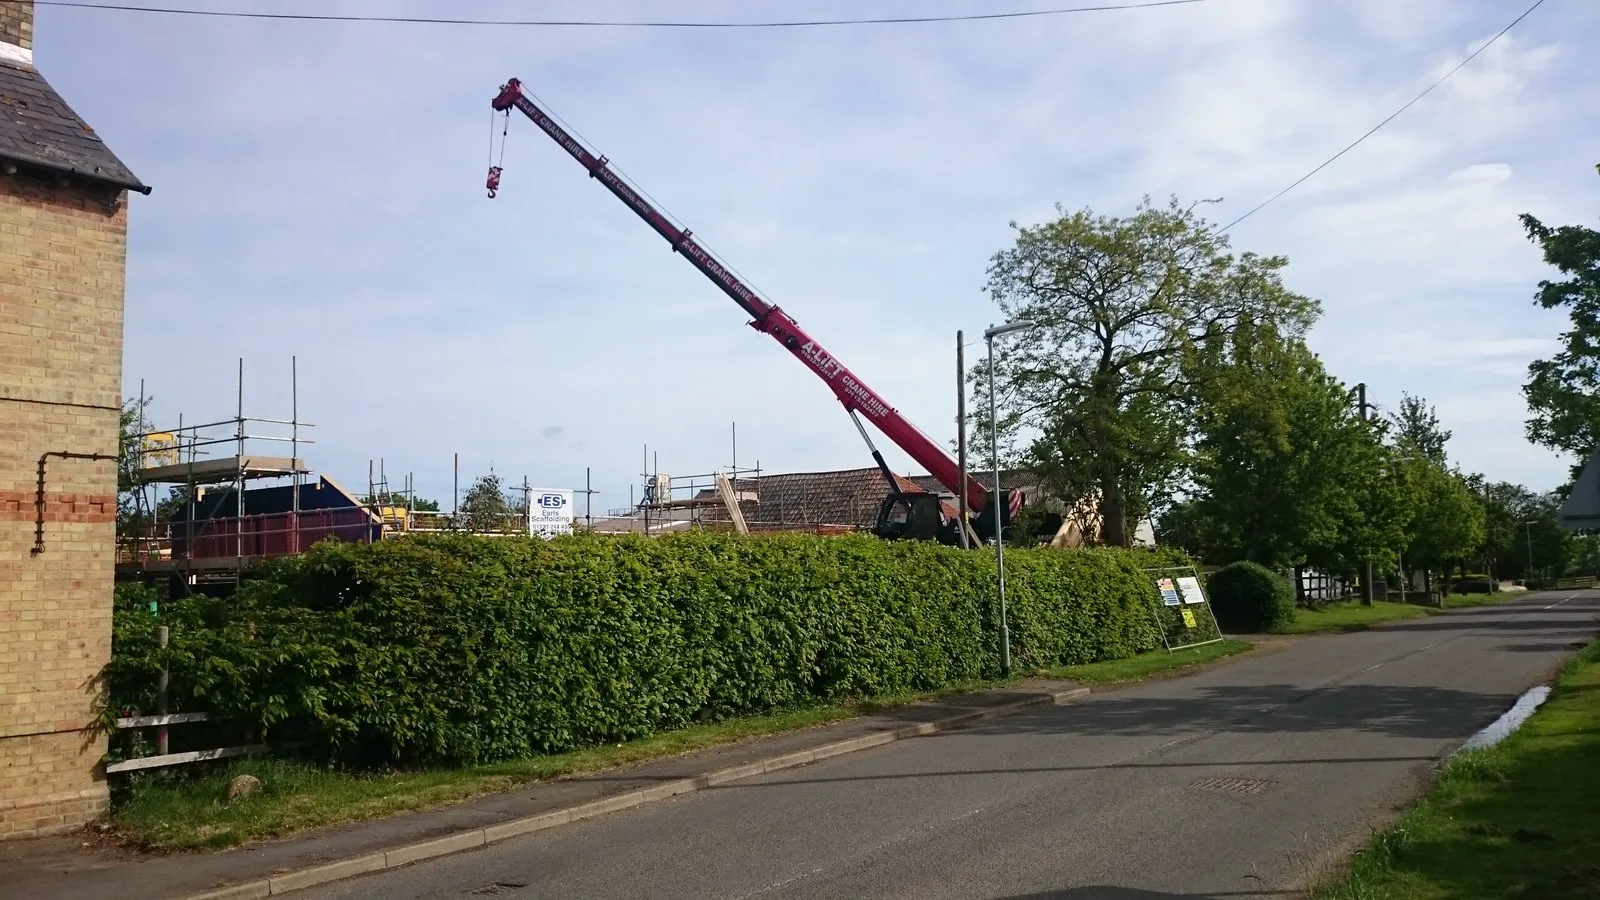 Photo showing: A lift crane hire